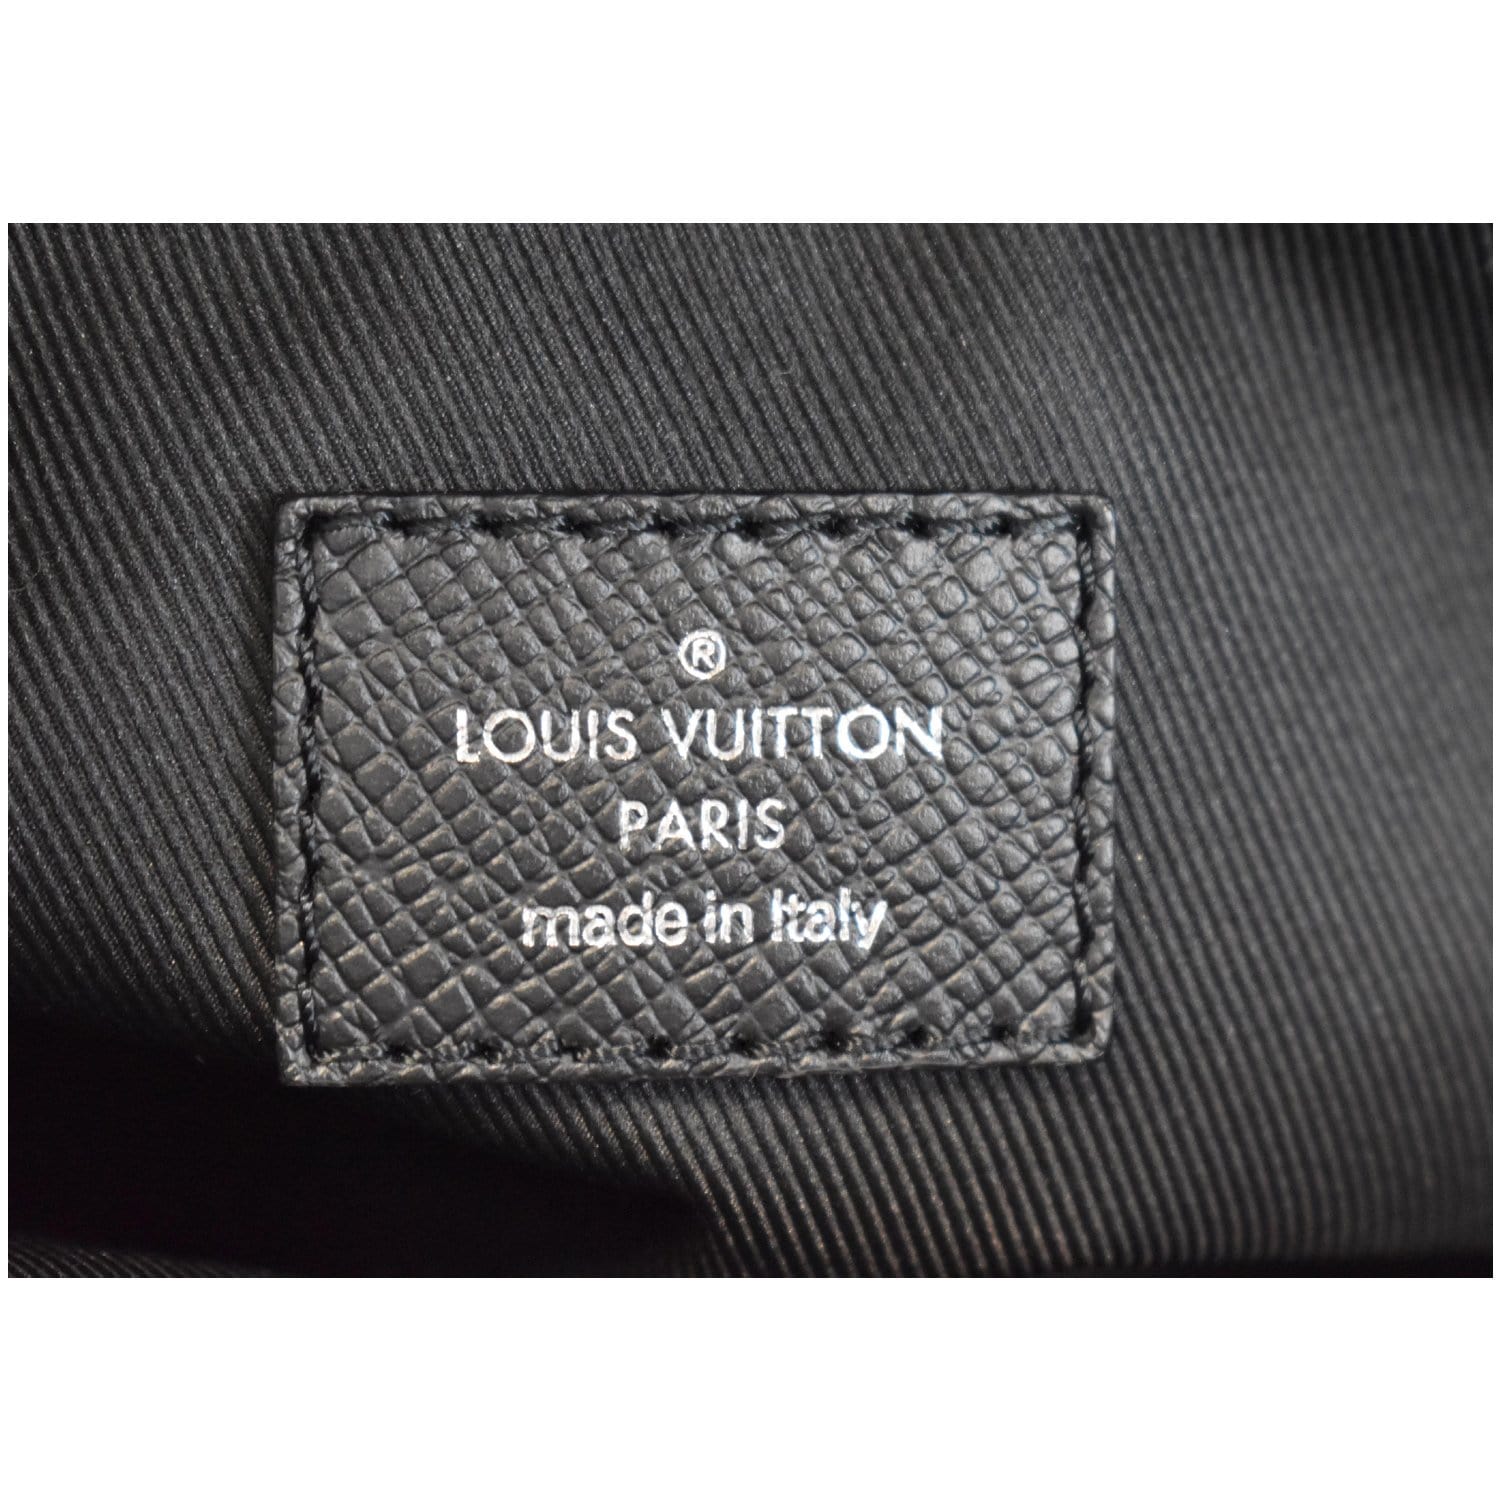 Shop Louis Vuitton 2019 SS Outdoor messenger (M30242, M30233) by JOY＋